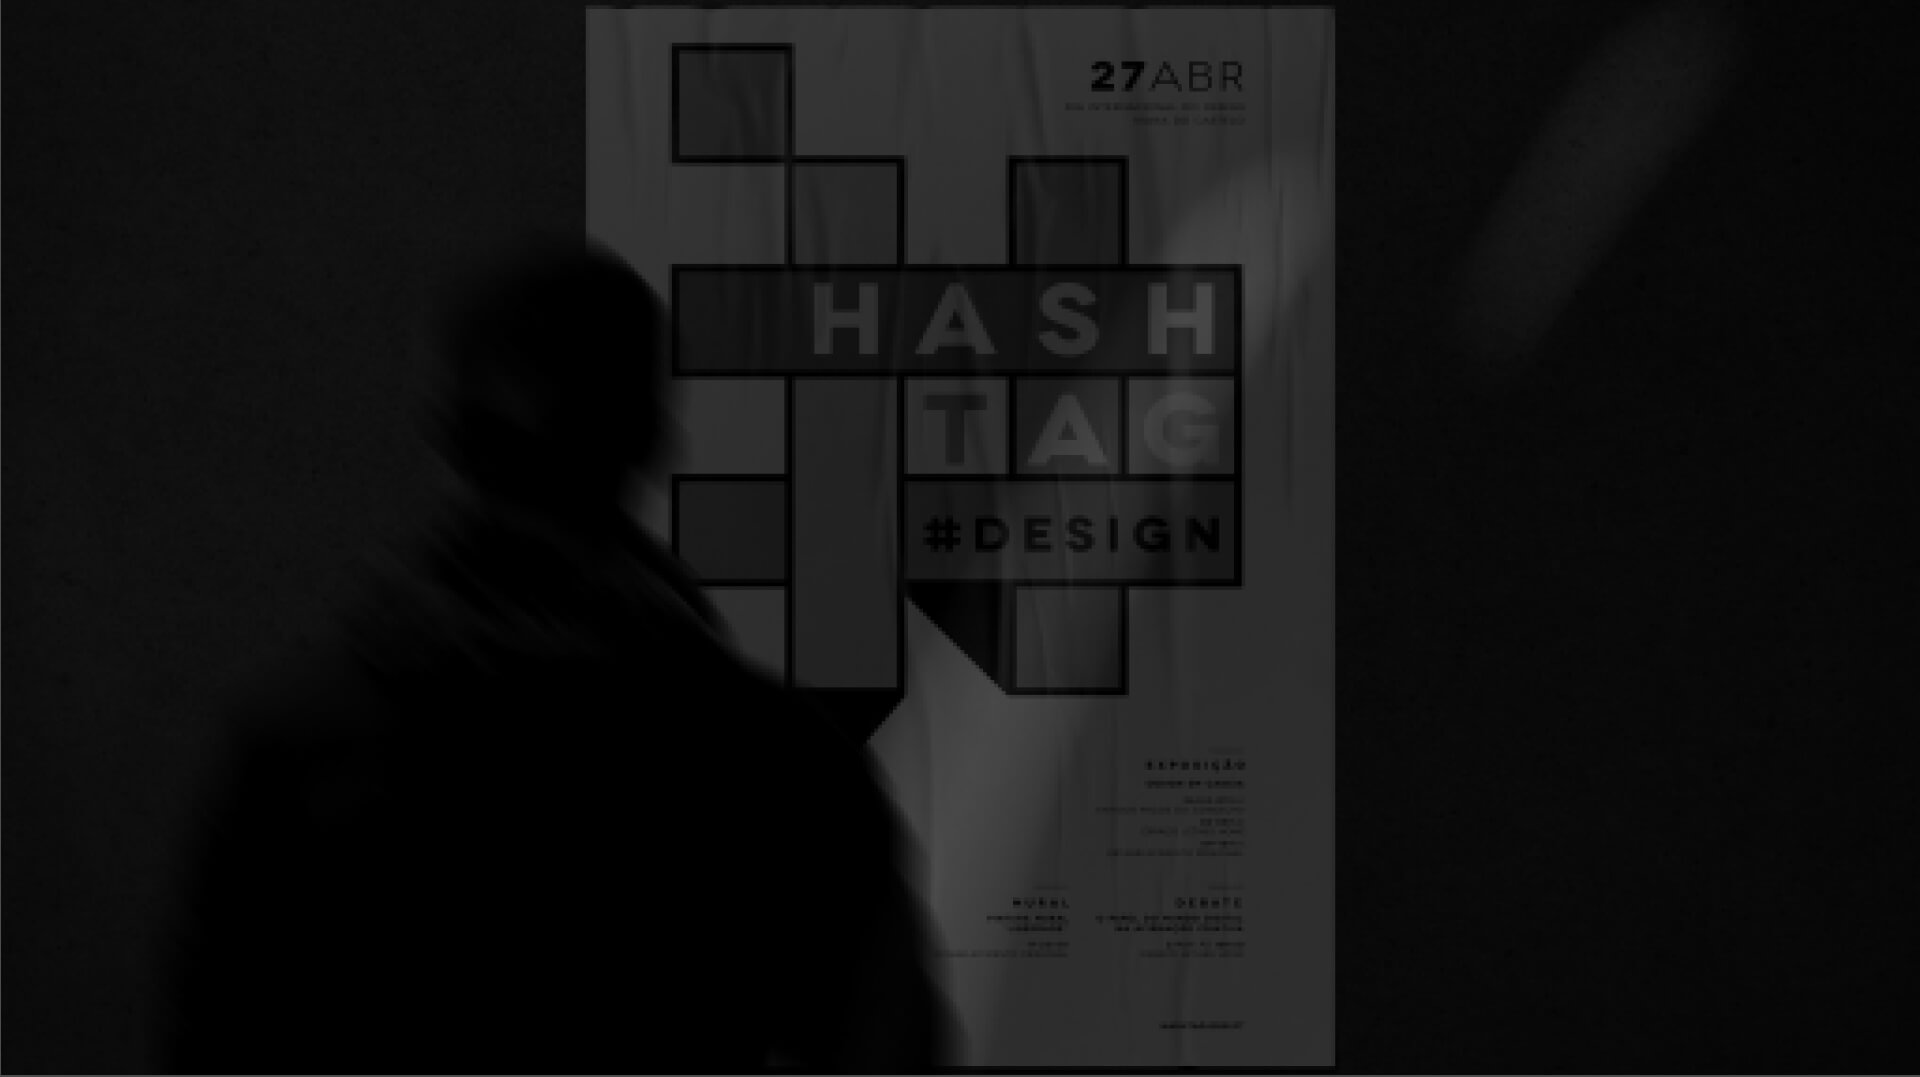 Background cartaz do evento Hashtag design organizado por Blisq Creative